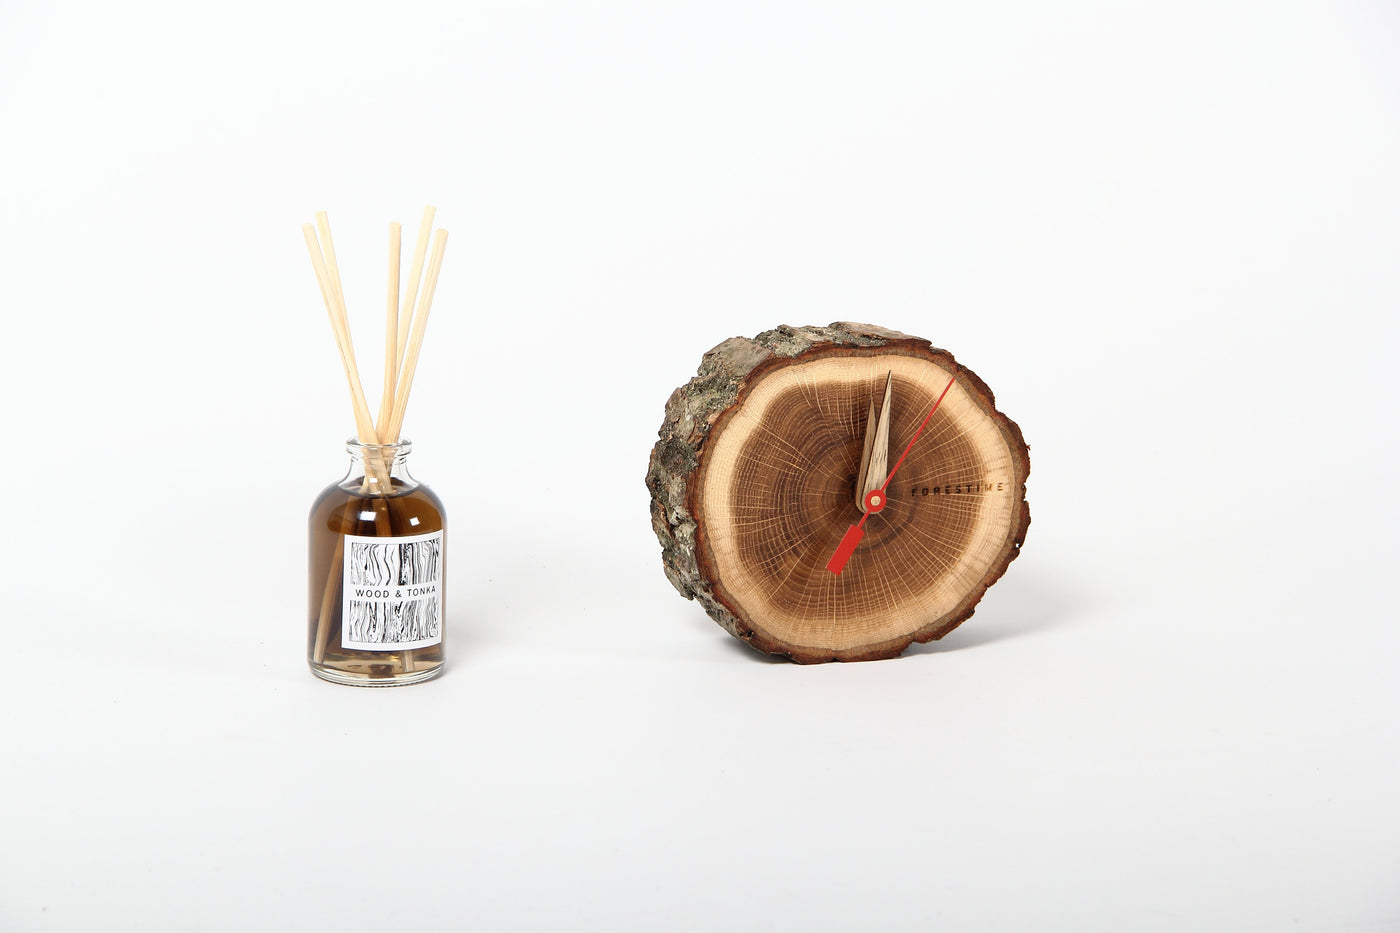 Laika Oak Slice Clock Gift Set-Home Goods-CLOCKS, ESSENTIAL OILS, OIL DIFFUSERS-Forest Homes-Nature inspired decor-Nature decor